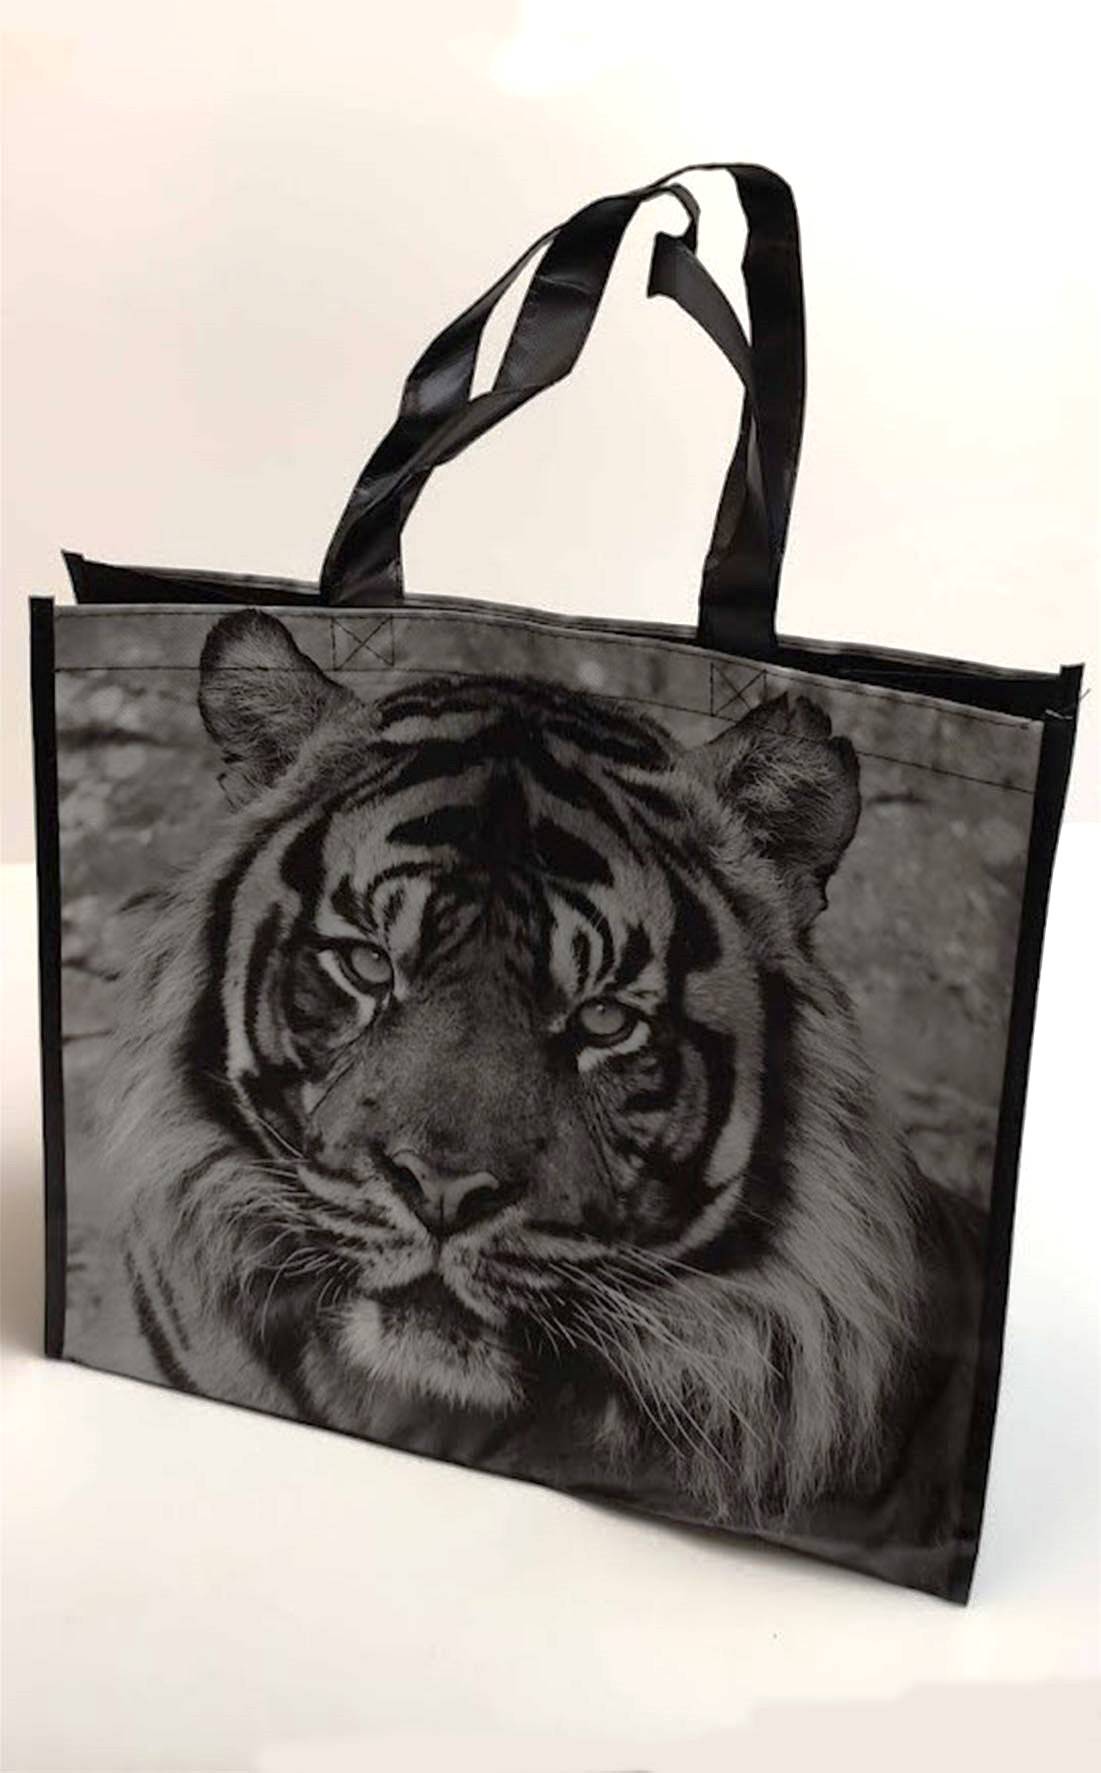 Tiger Bag For Life